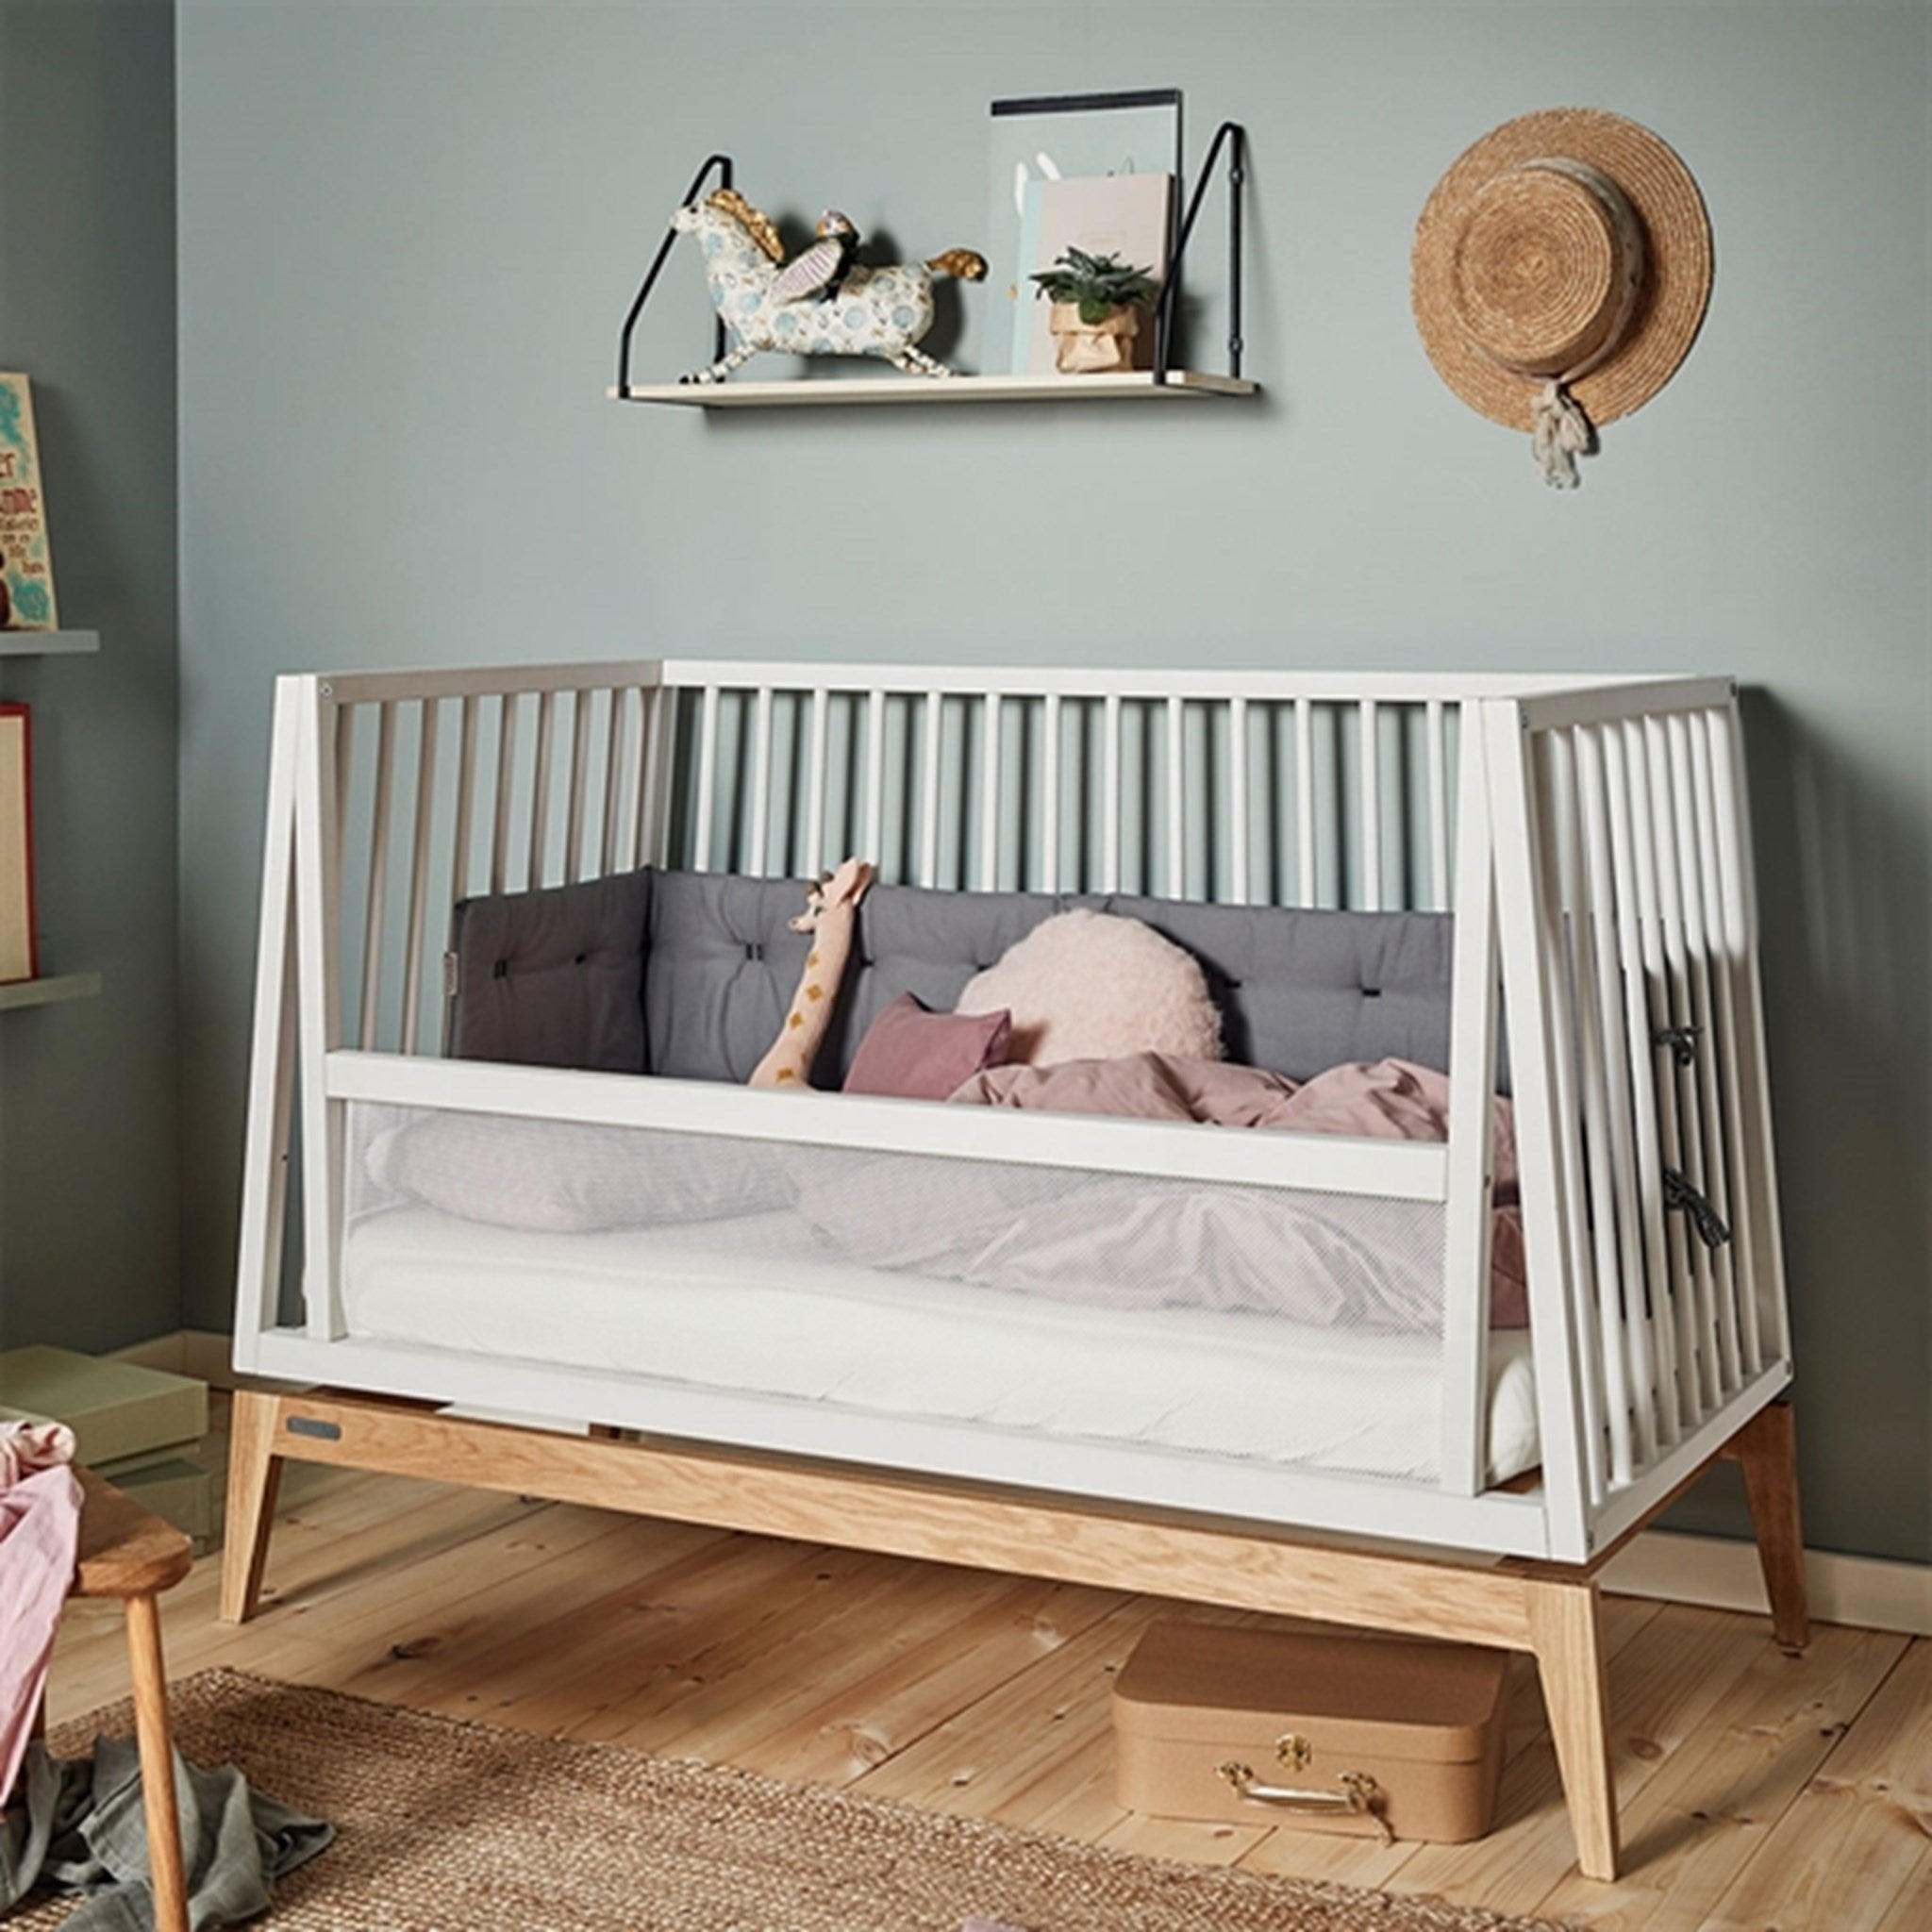 Leander Luna™ Expansion Part for Baby Bed White 6